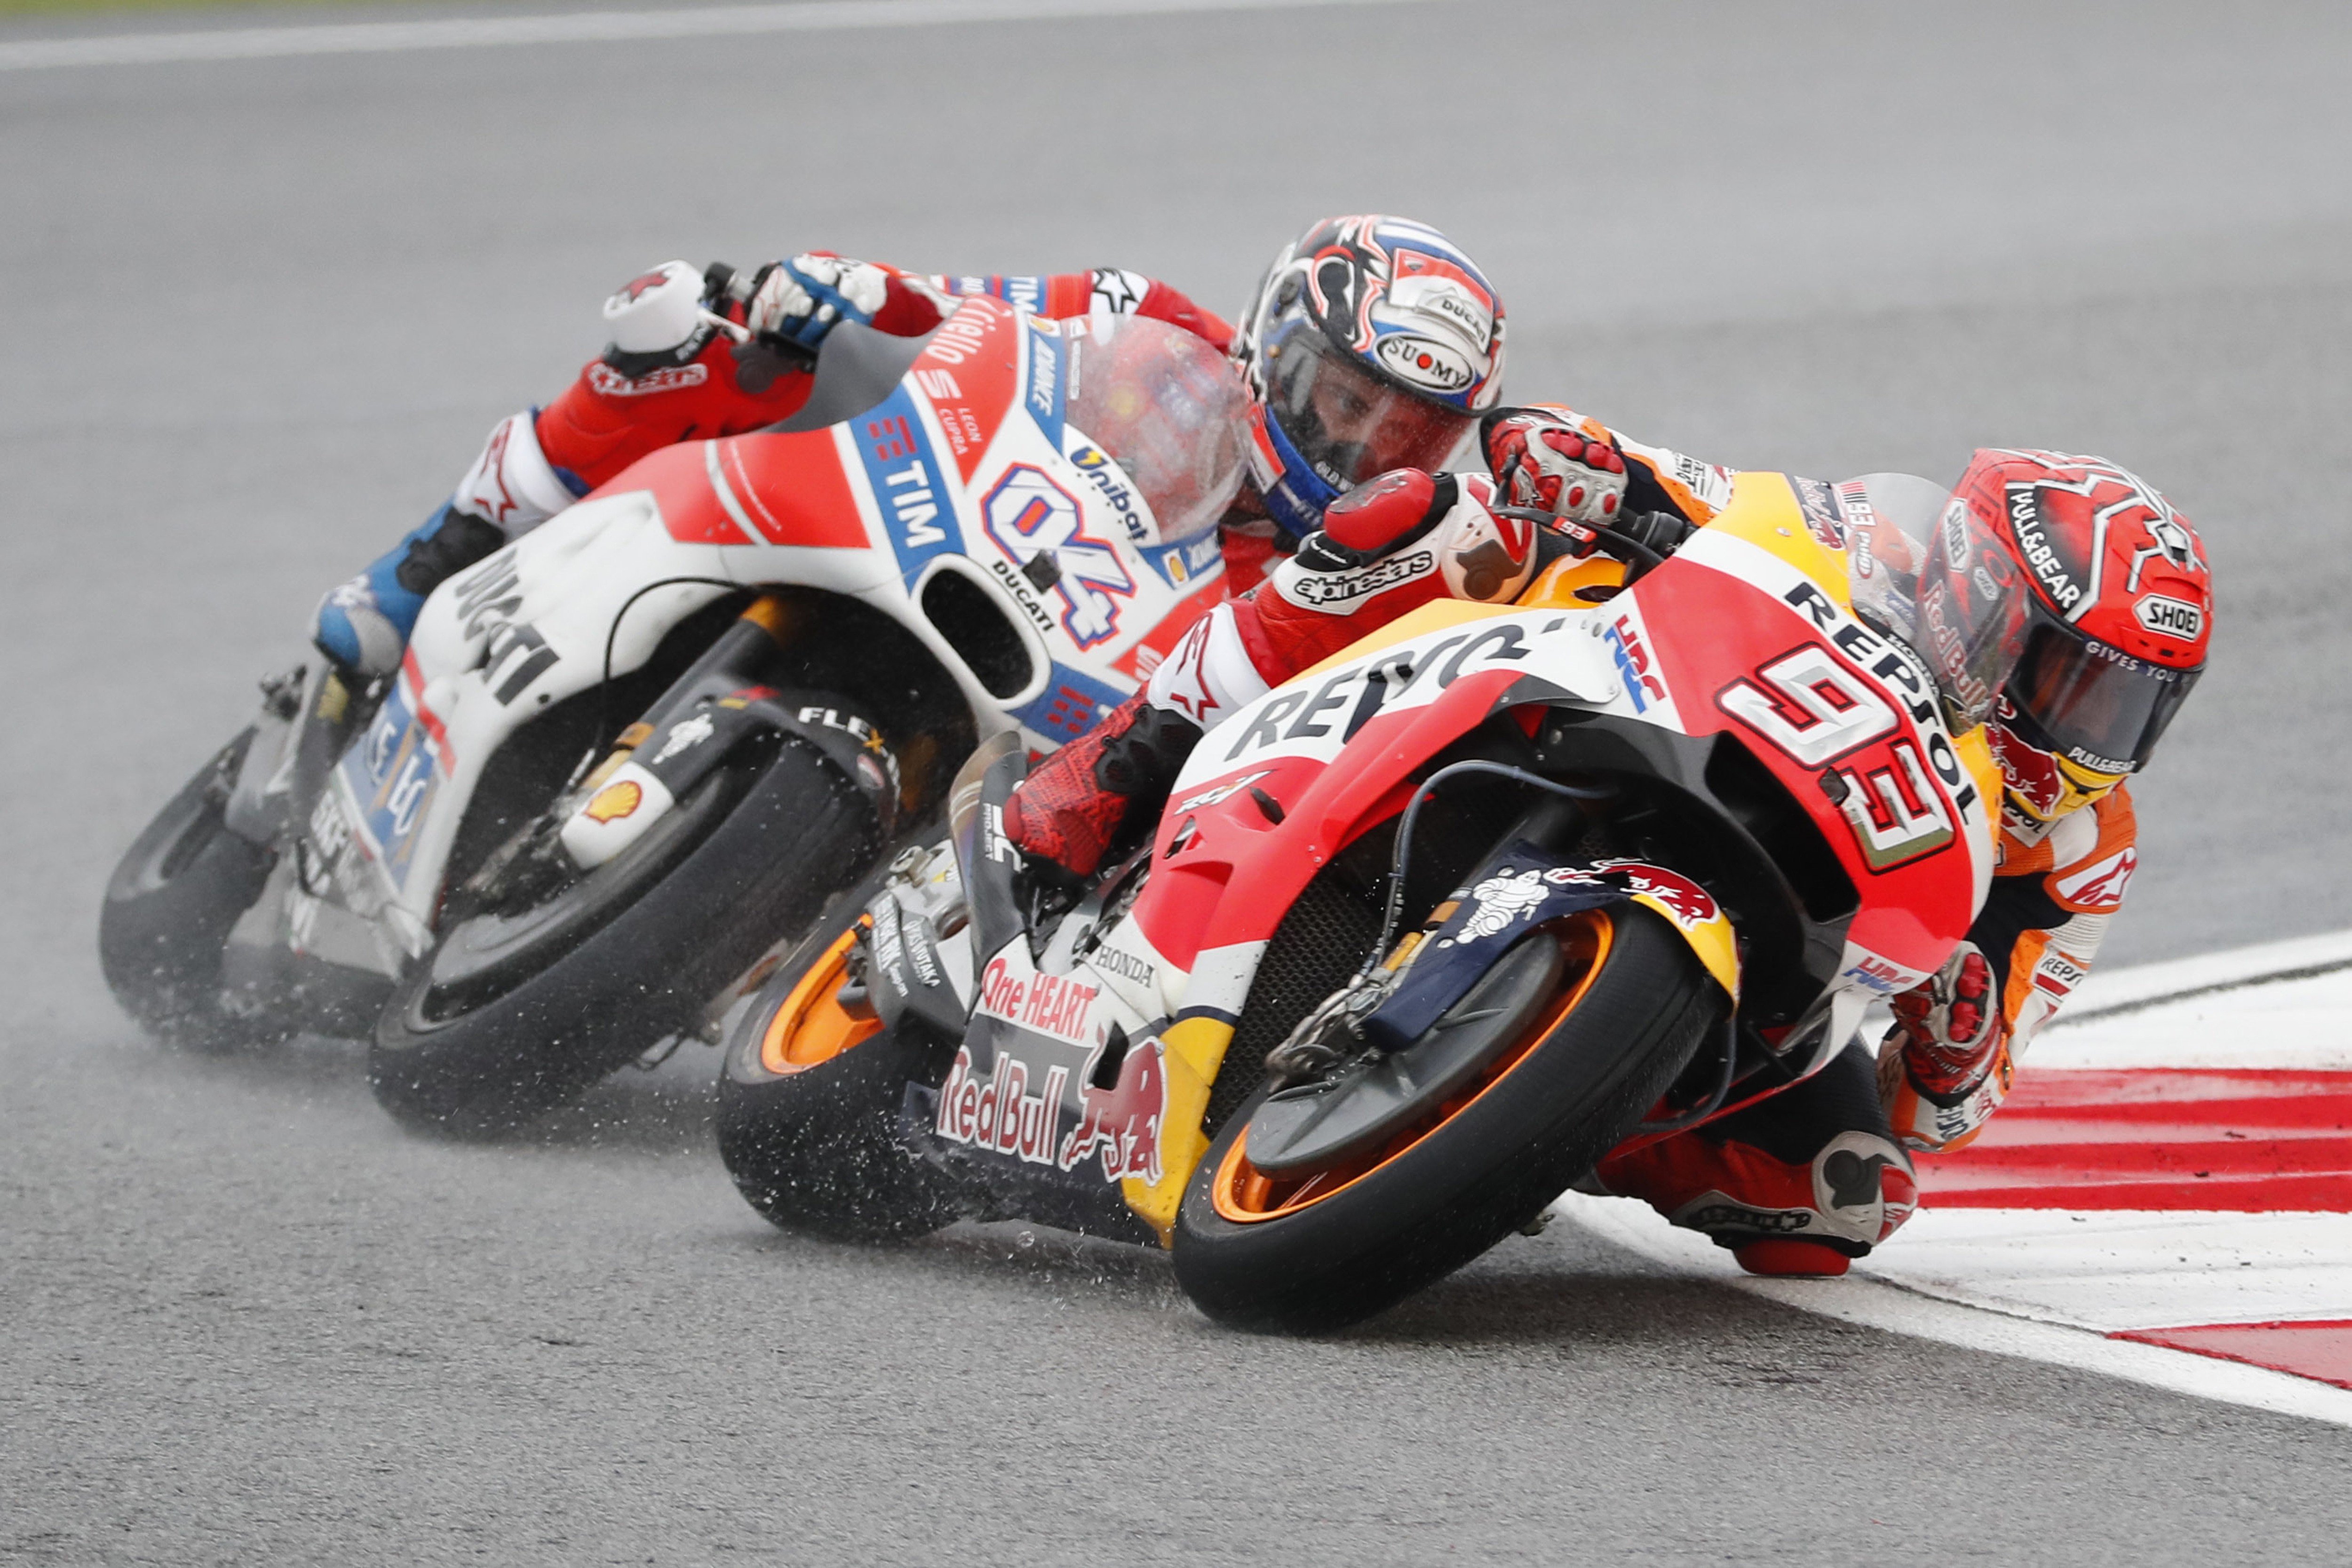 Spain's MotoGP rider Marc Marquez steers his Honda as Italy's MotoGP rider Andrea Dovizioso follows close behind during the Malaysia MotoGP. Photo: AP